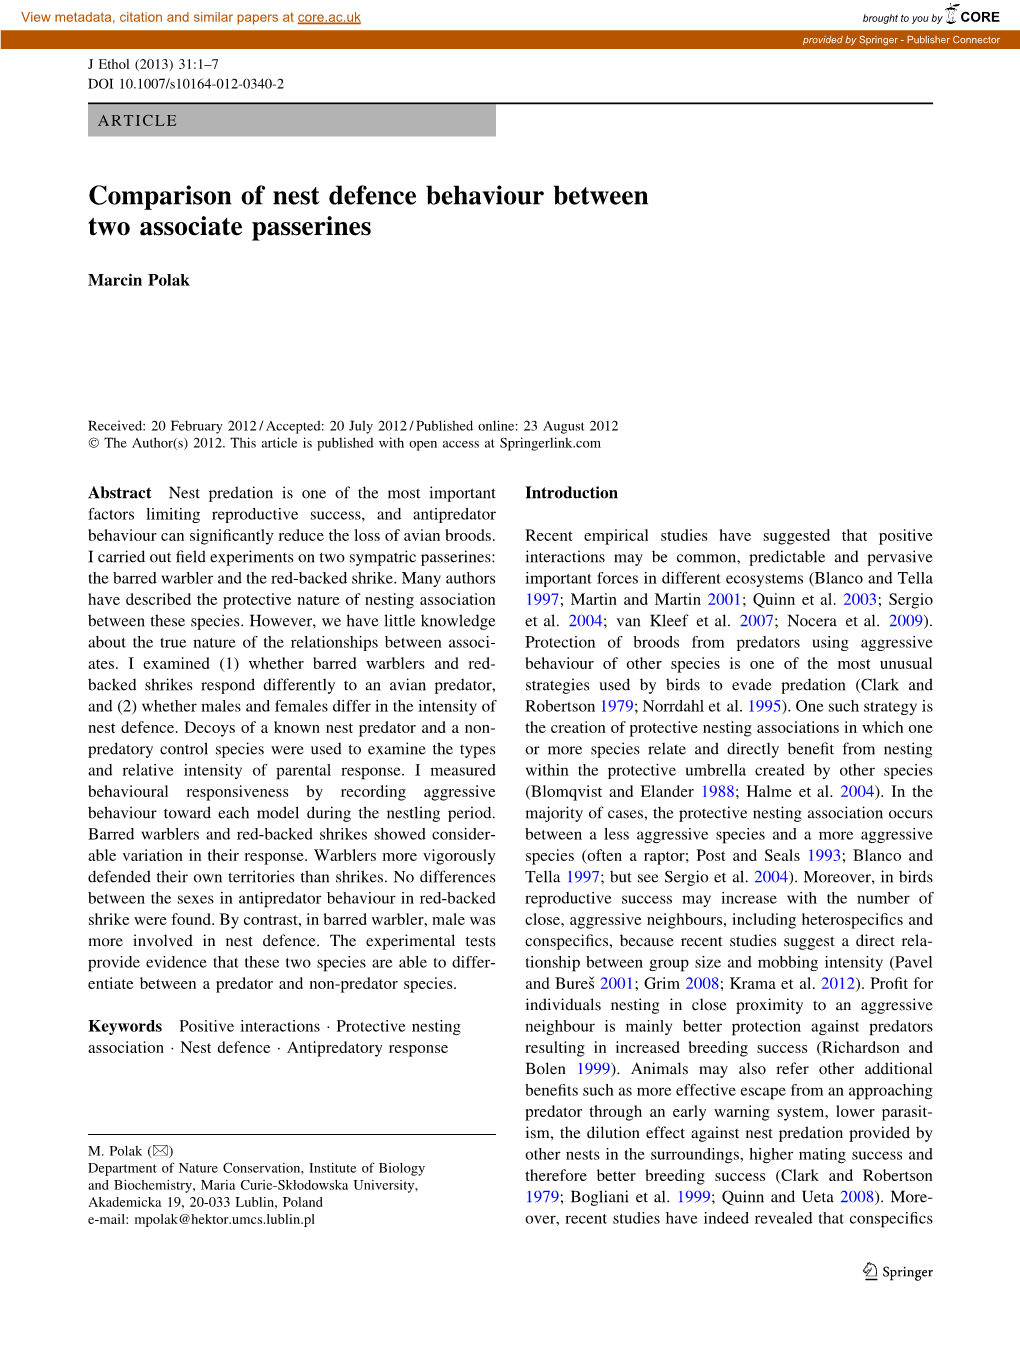 Comparison of Nest Defence Behaviour Between Two Associate Passerines